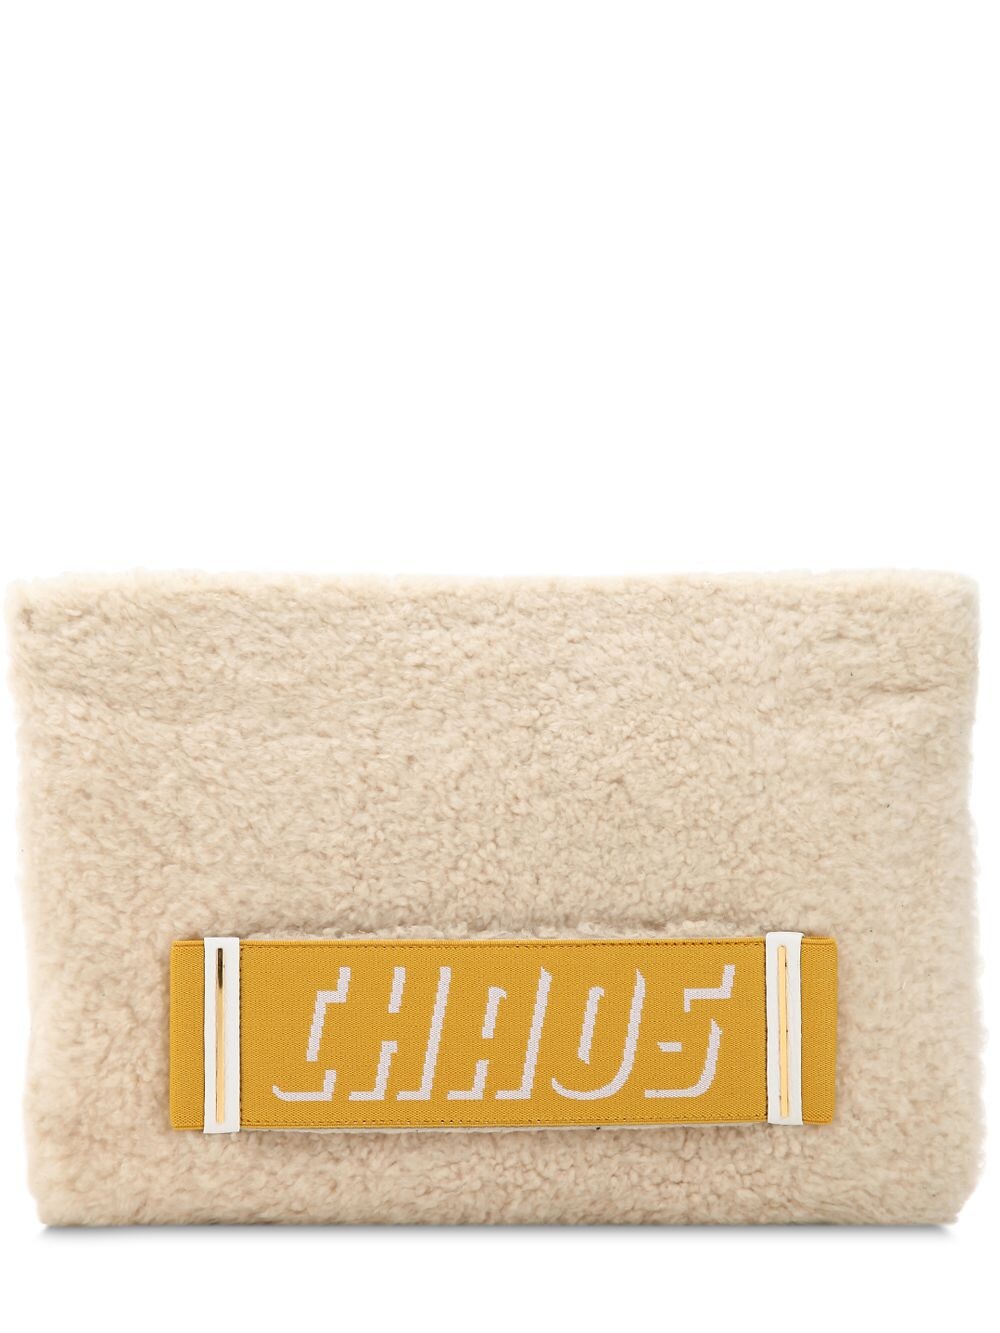 Chaos Printed Logo Shearling Clutch In Cream